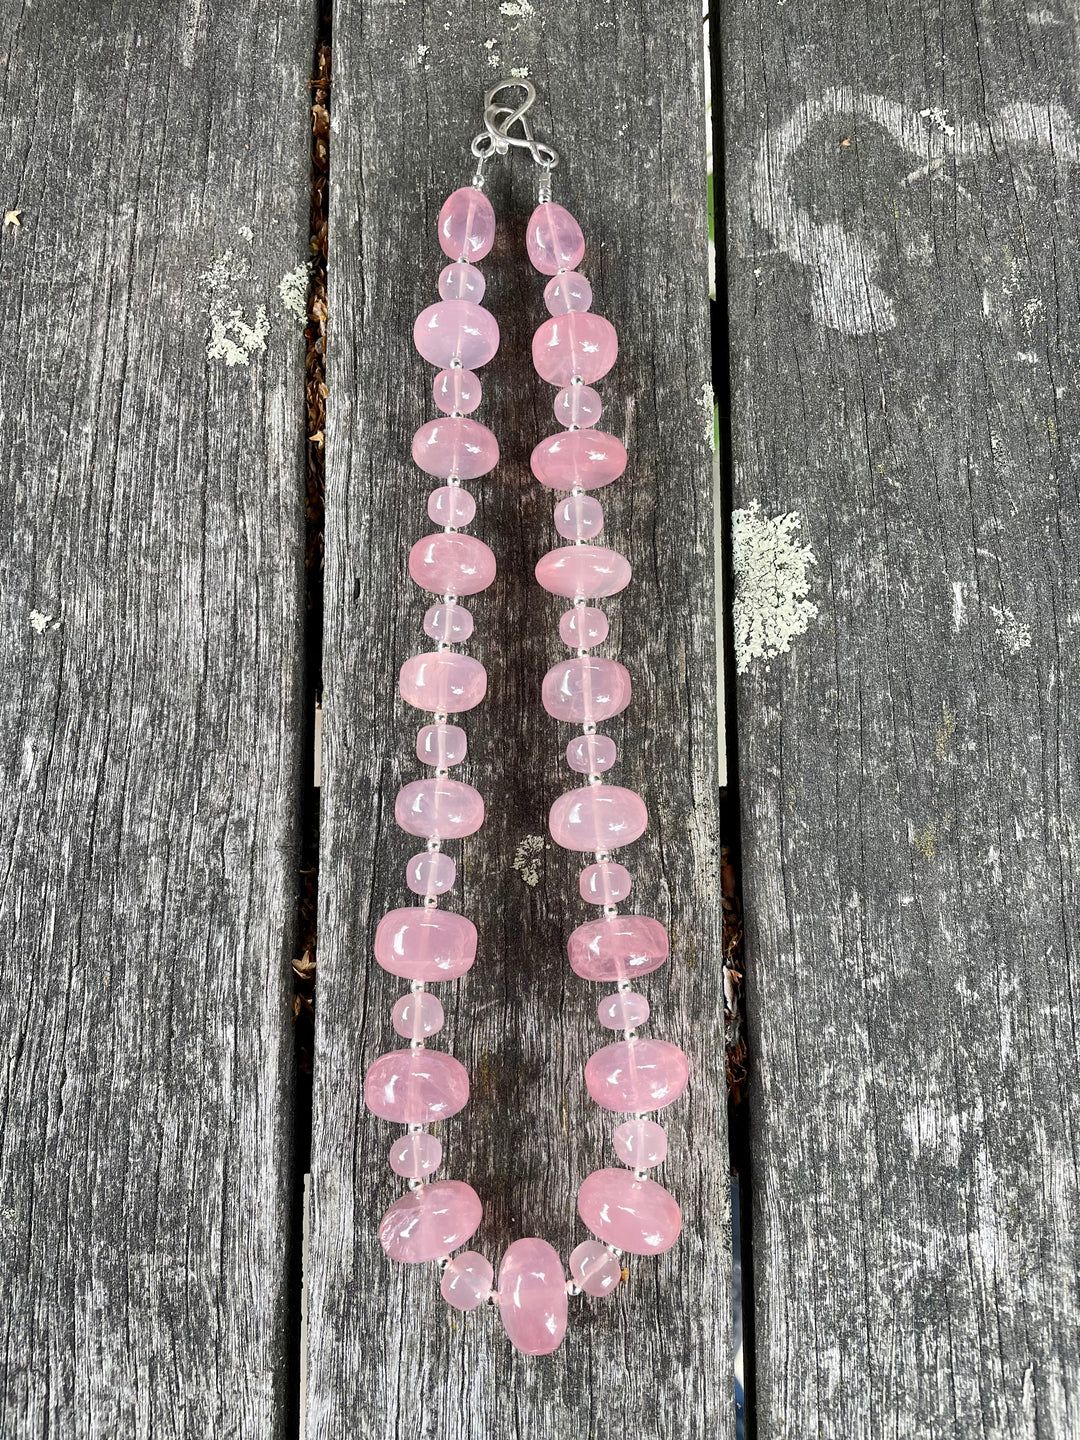 Brazilian rose Quartz necklace